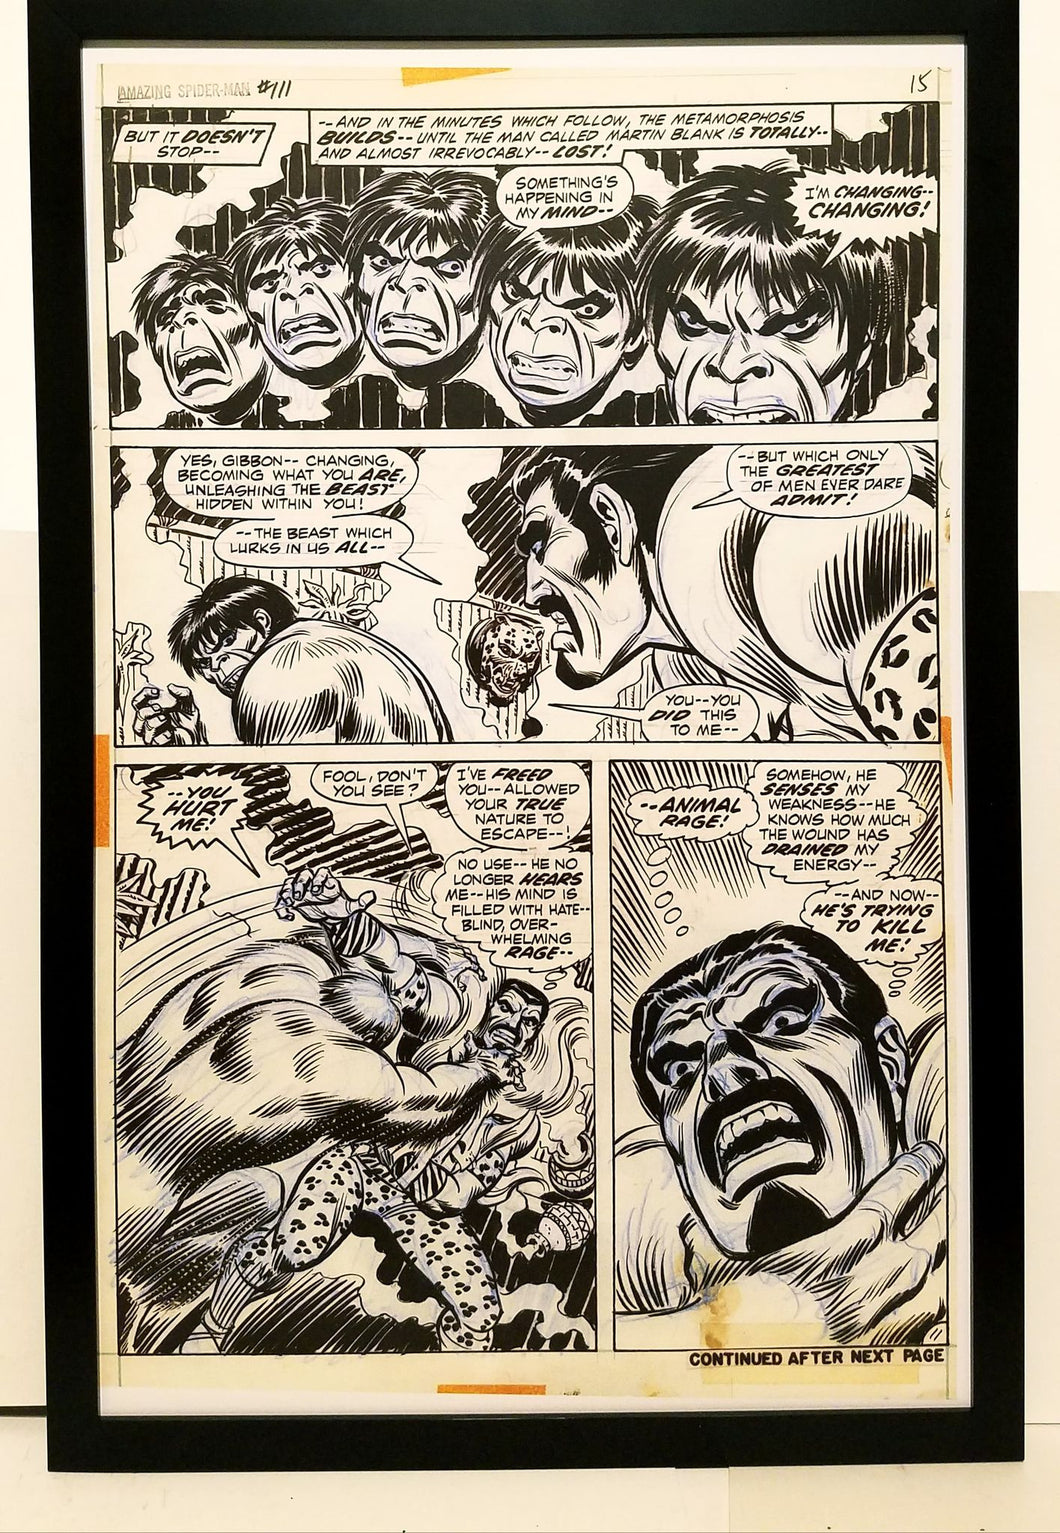 Amazing Spider-Man #111 pg. 11 John Romita 11x17 FRAMED Original Art Poster Marvel Comics